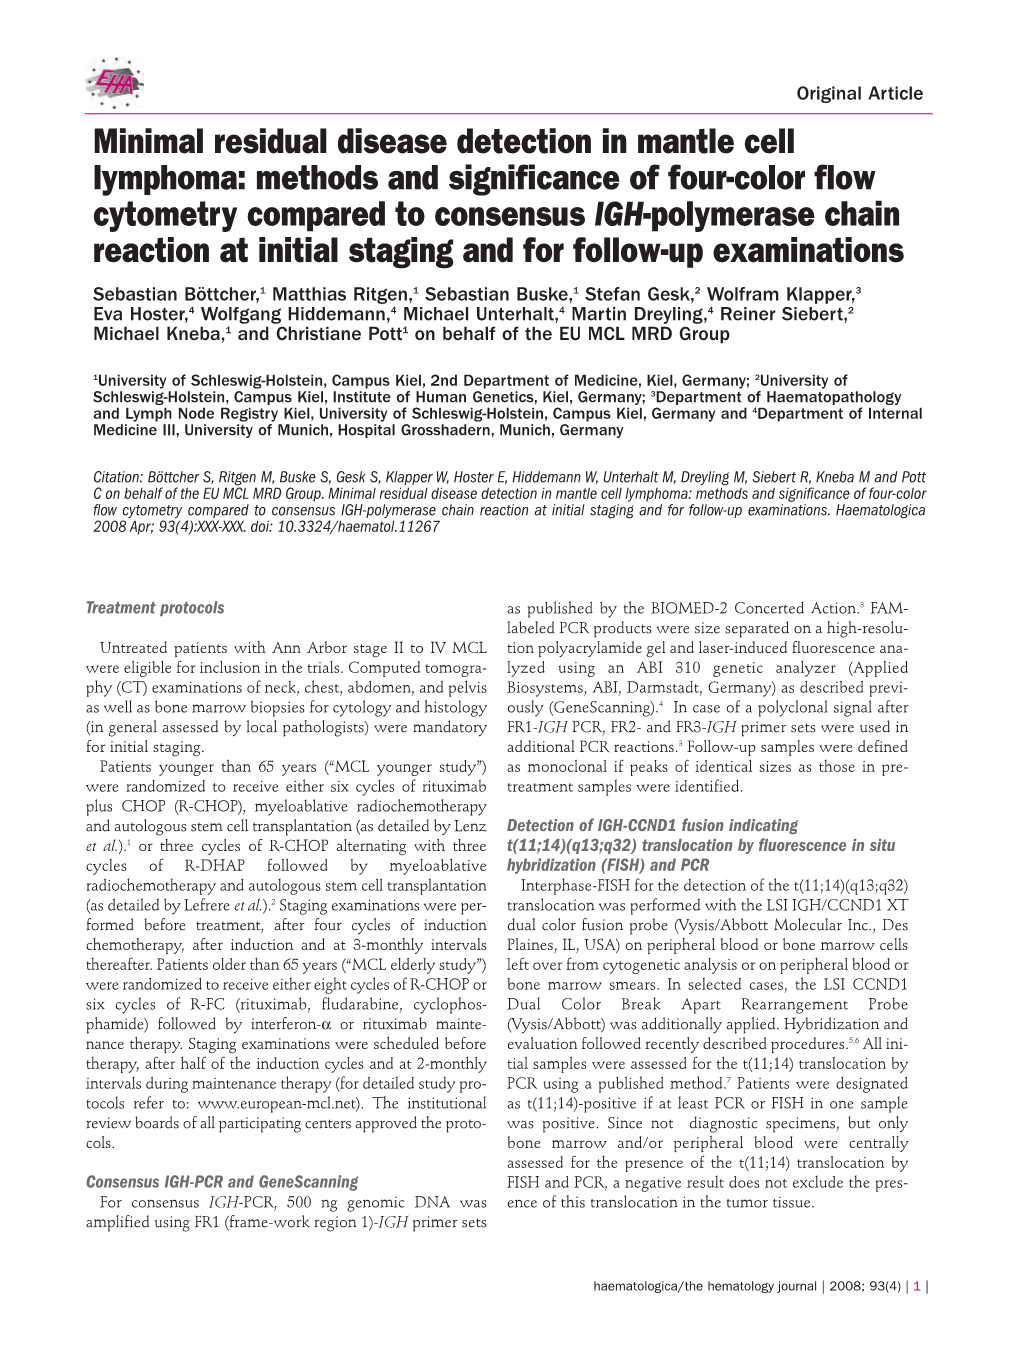 Minimal Residual Disease Detection in Mantle Cell Lymphoma